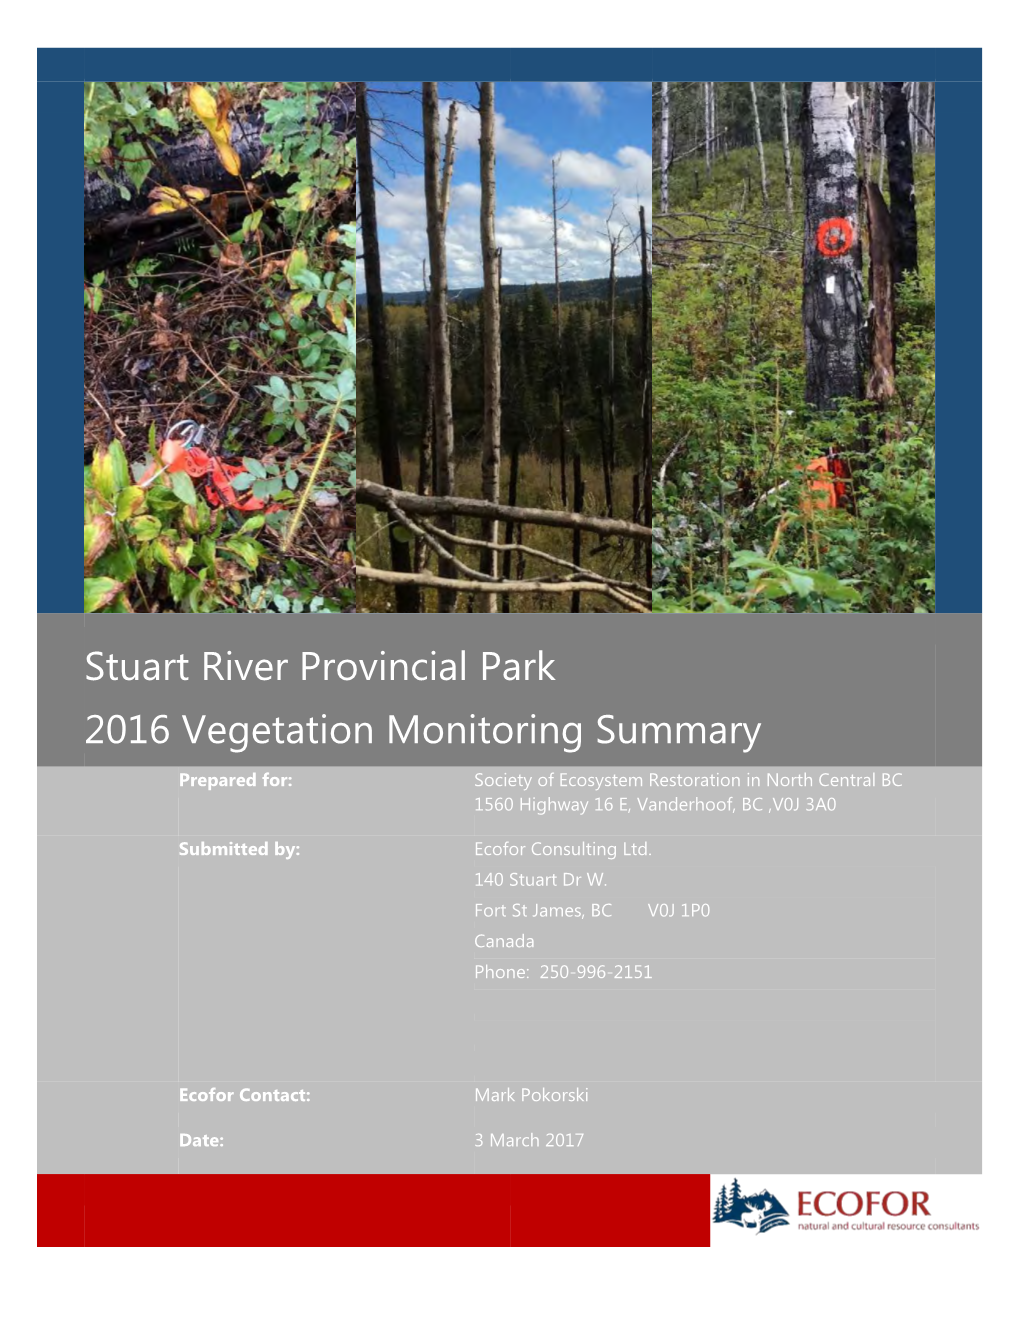 Stuart River Provincial Park 2016 Vegetation Monitoring Summary